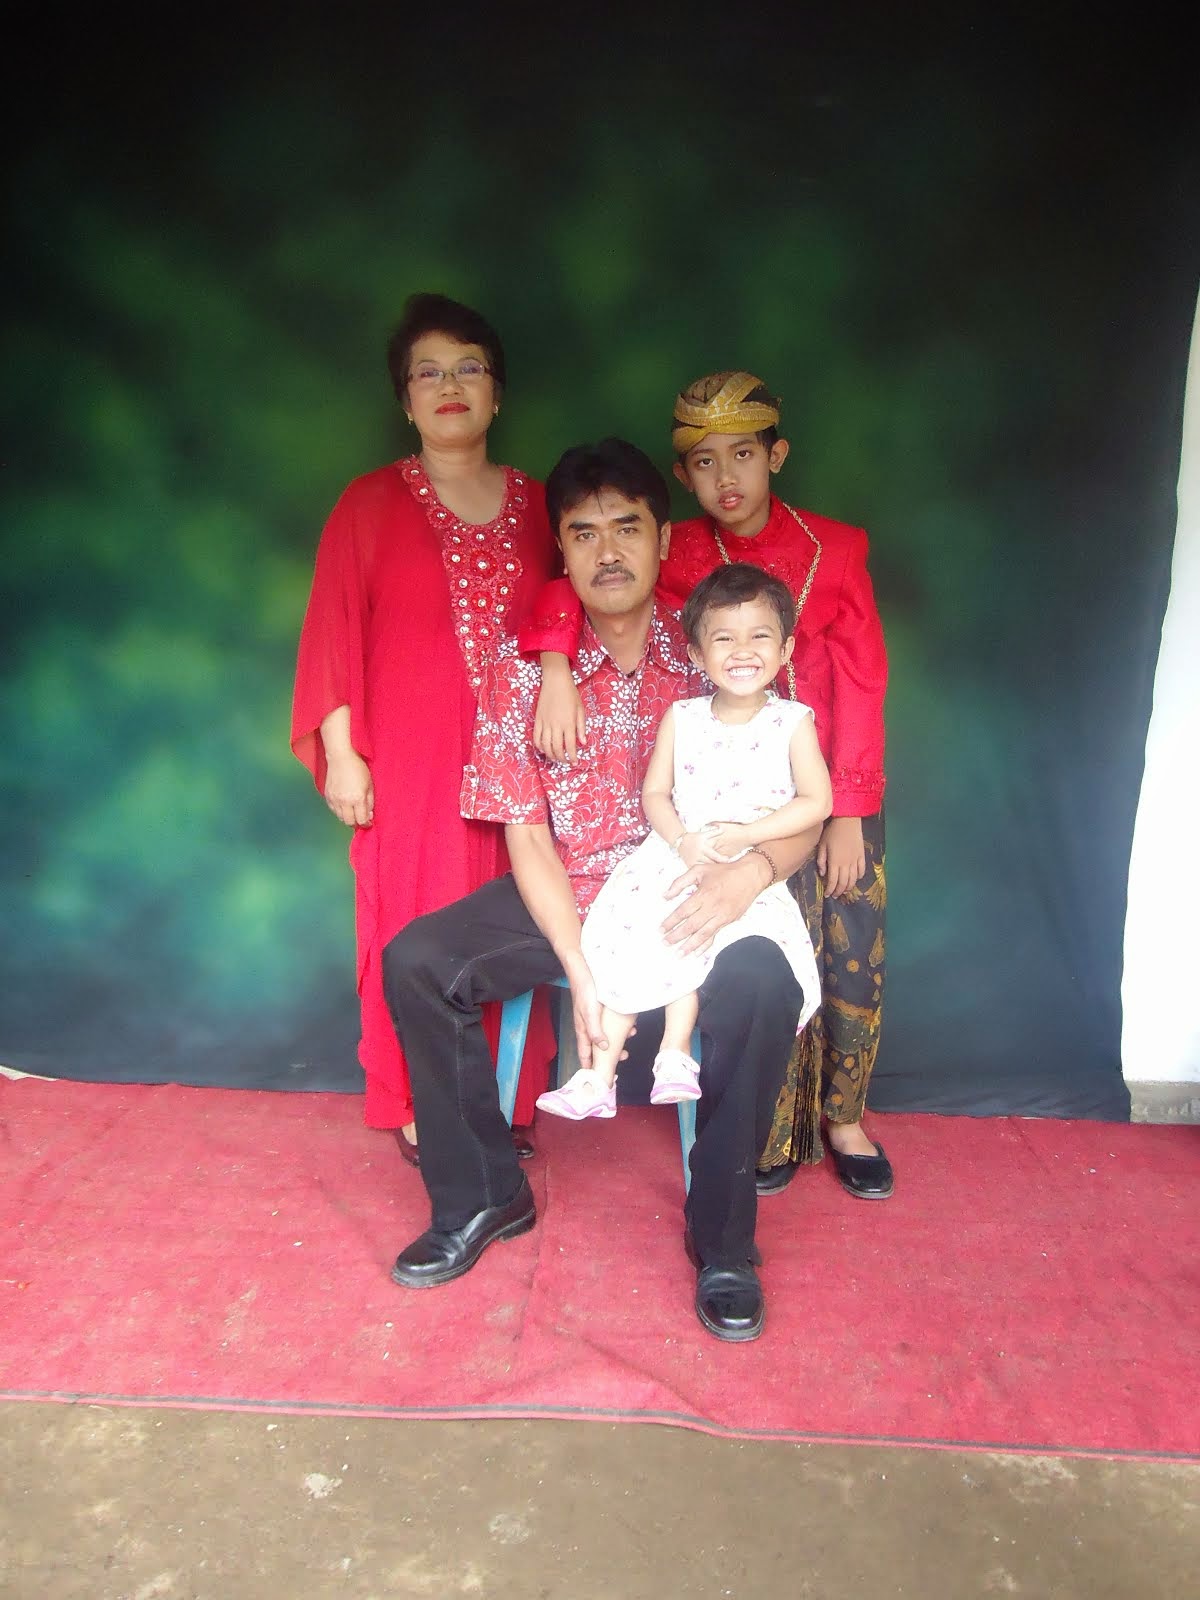 Manda's family